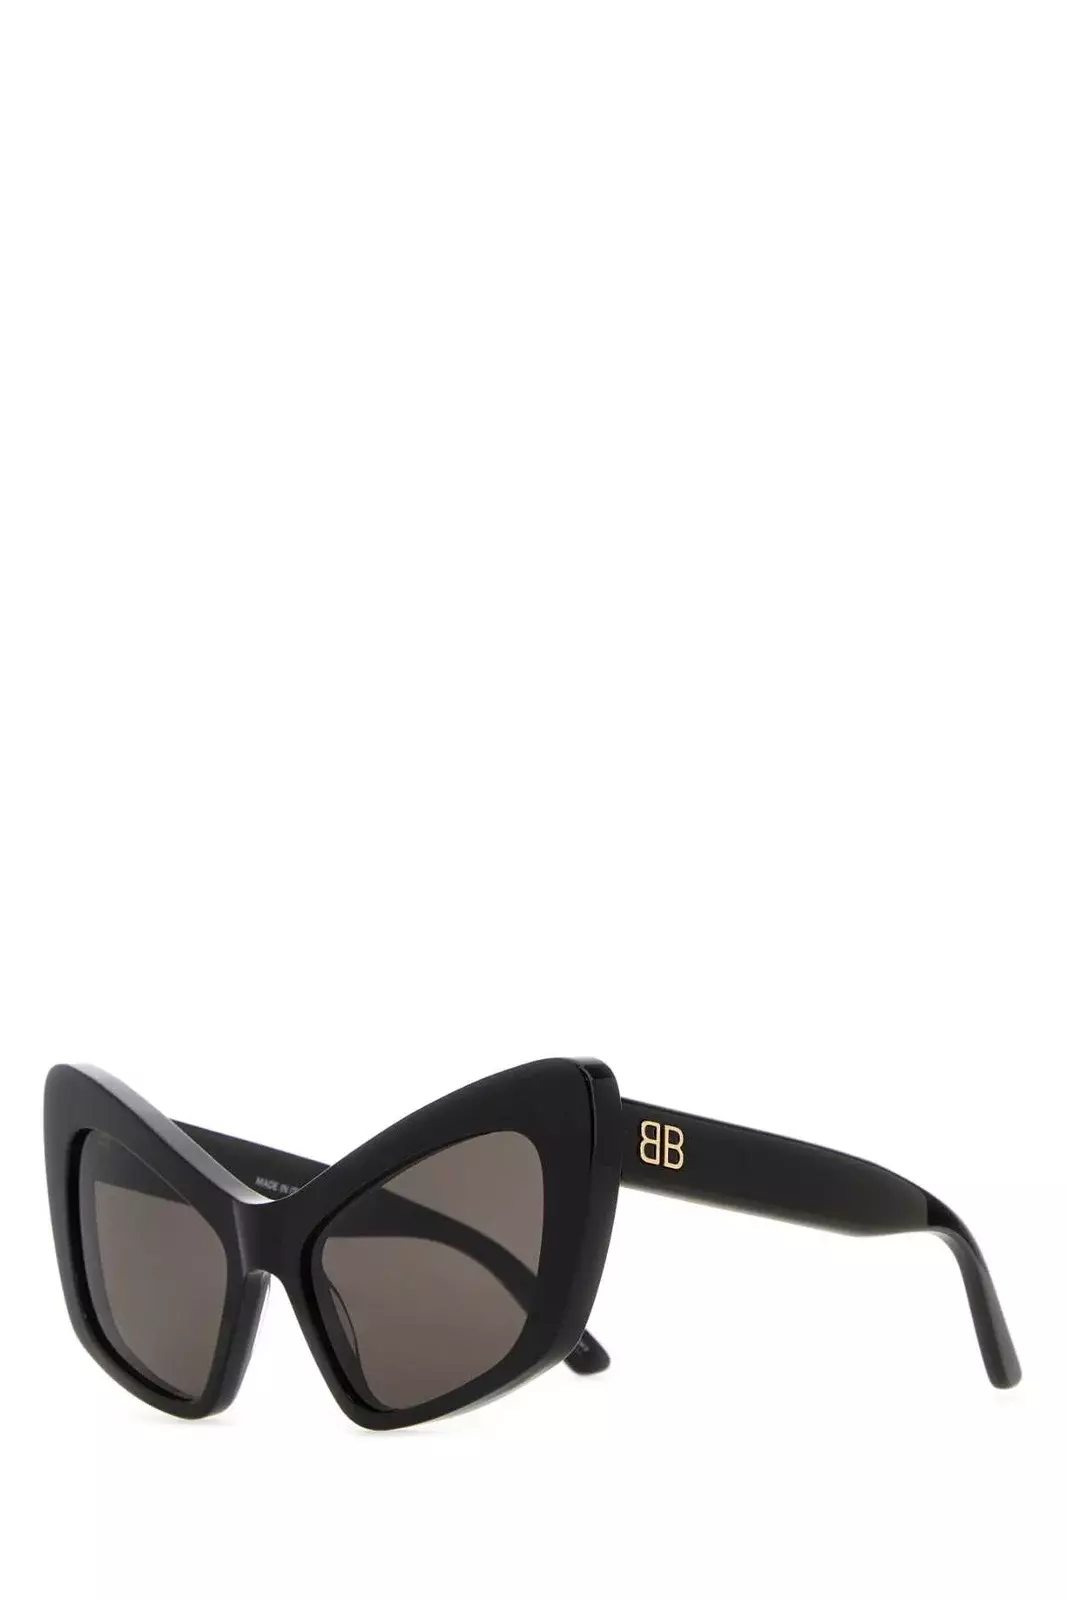 Balenciaga Eyewear Butterfly Framed Sunglasses